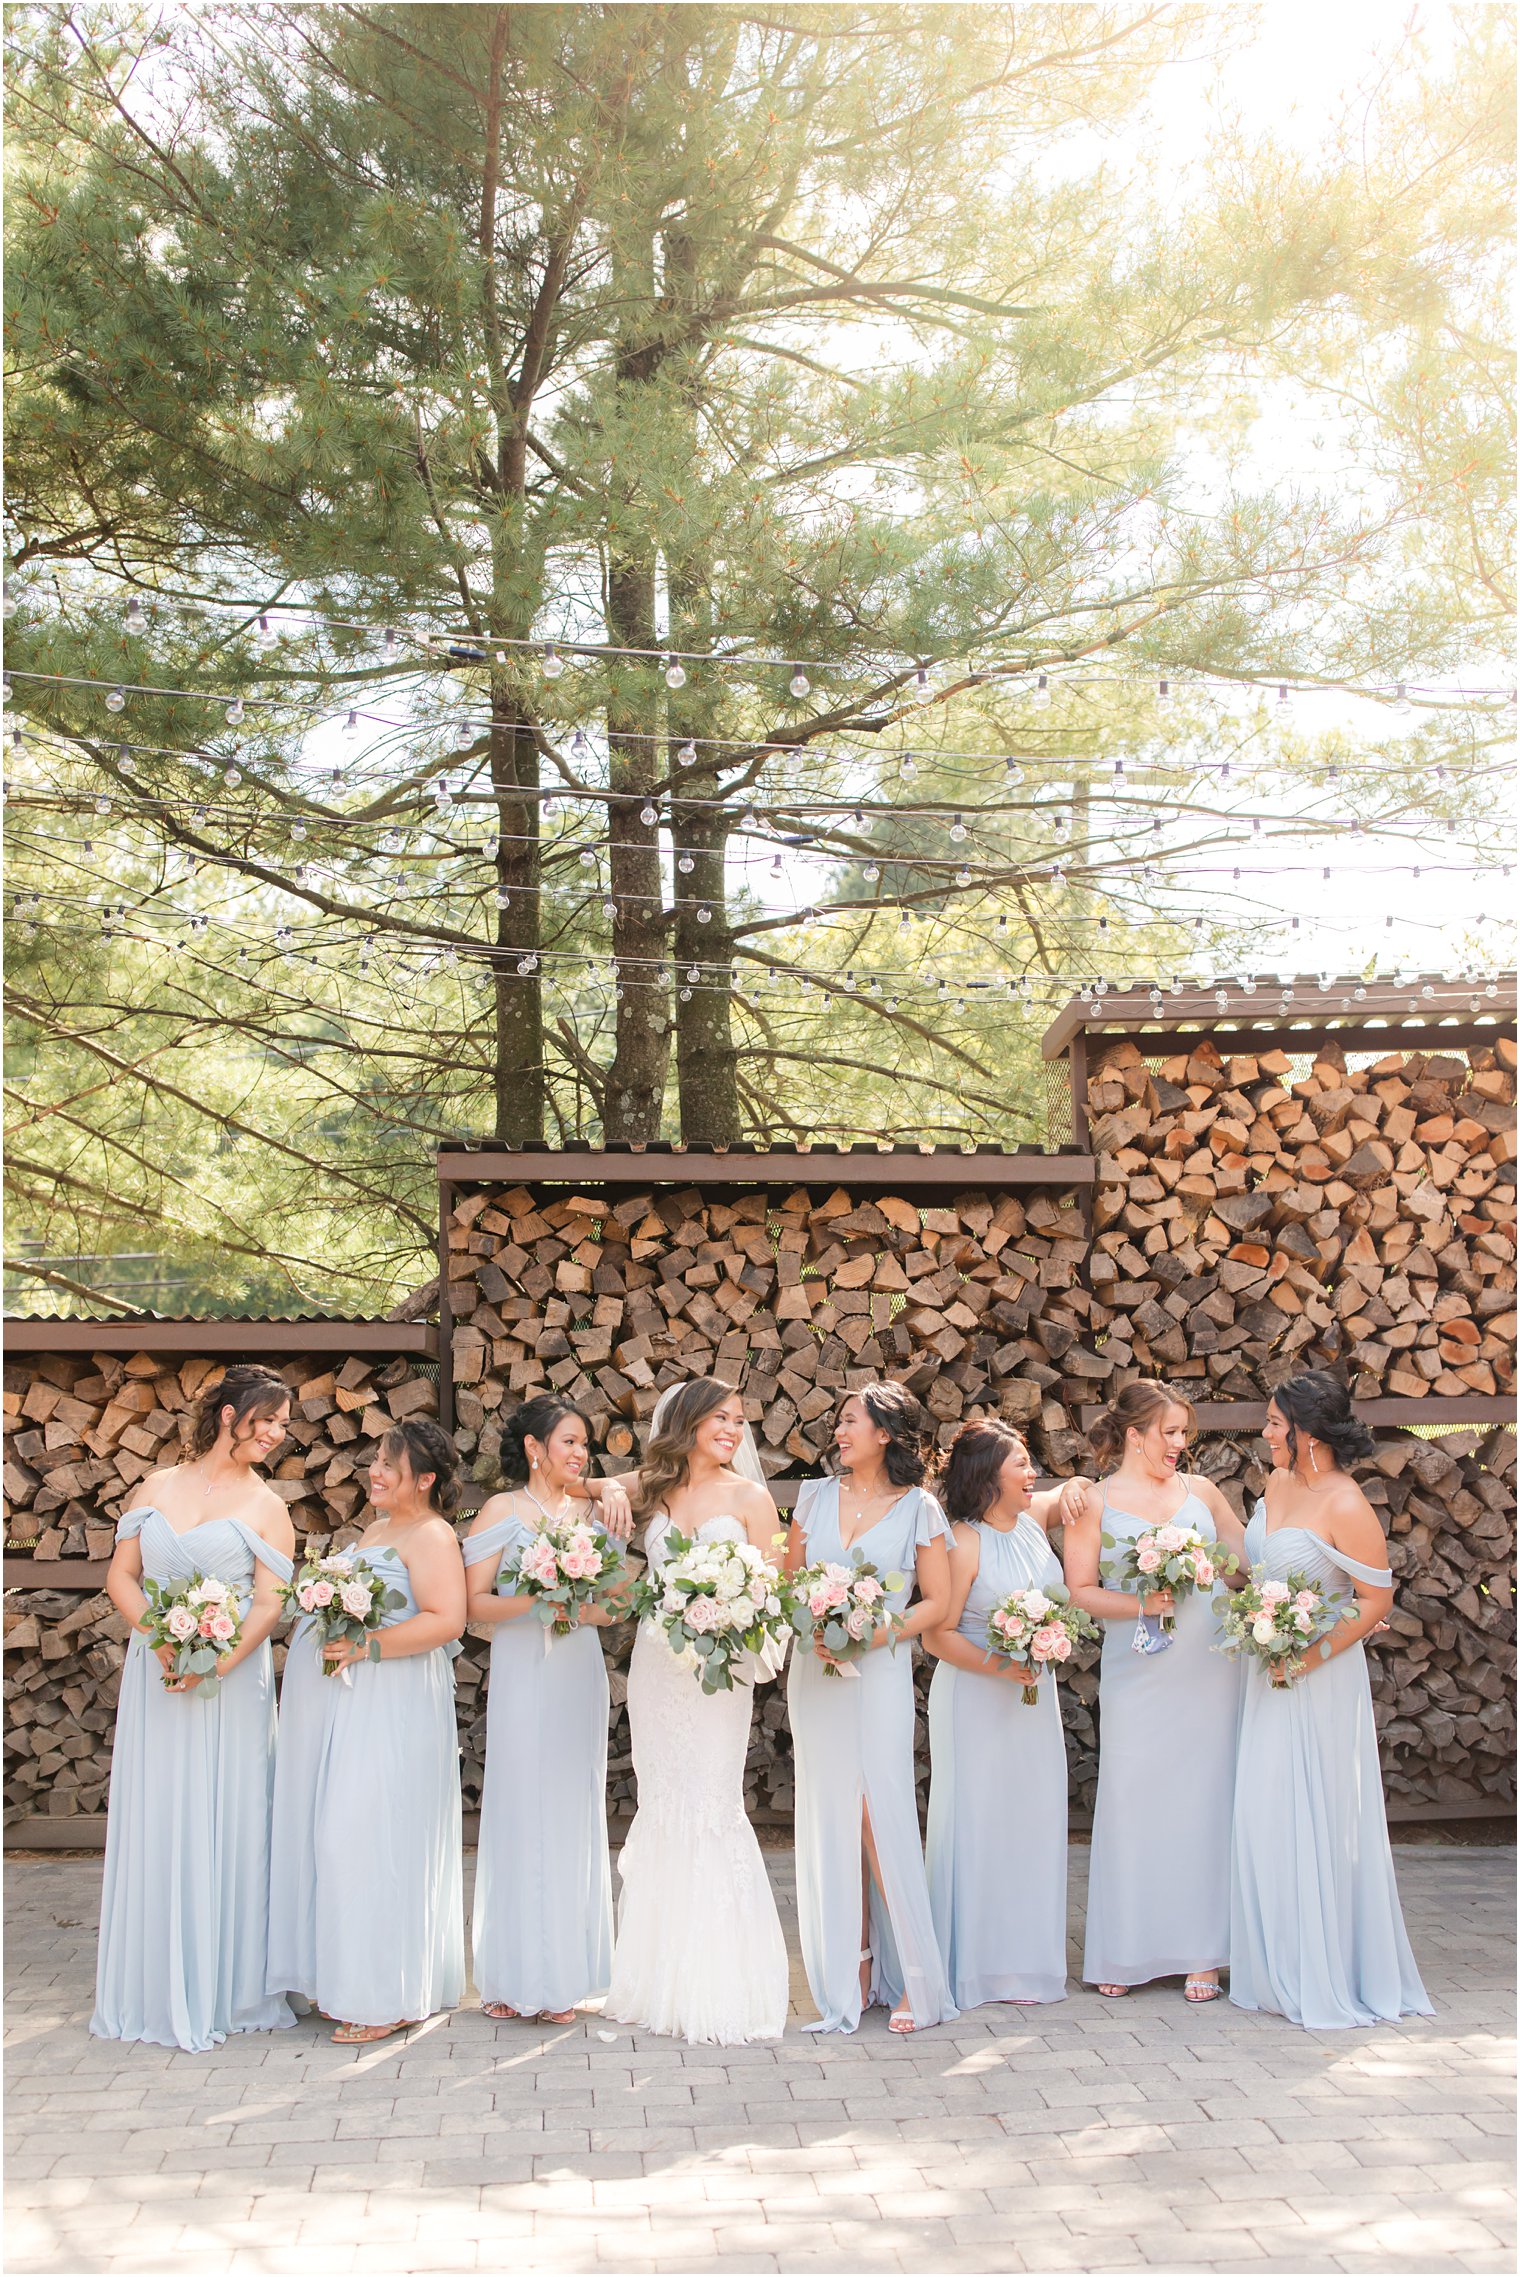 Bridesmaids wearing blue dresses